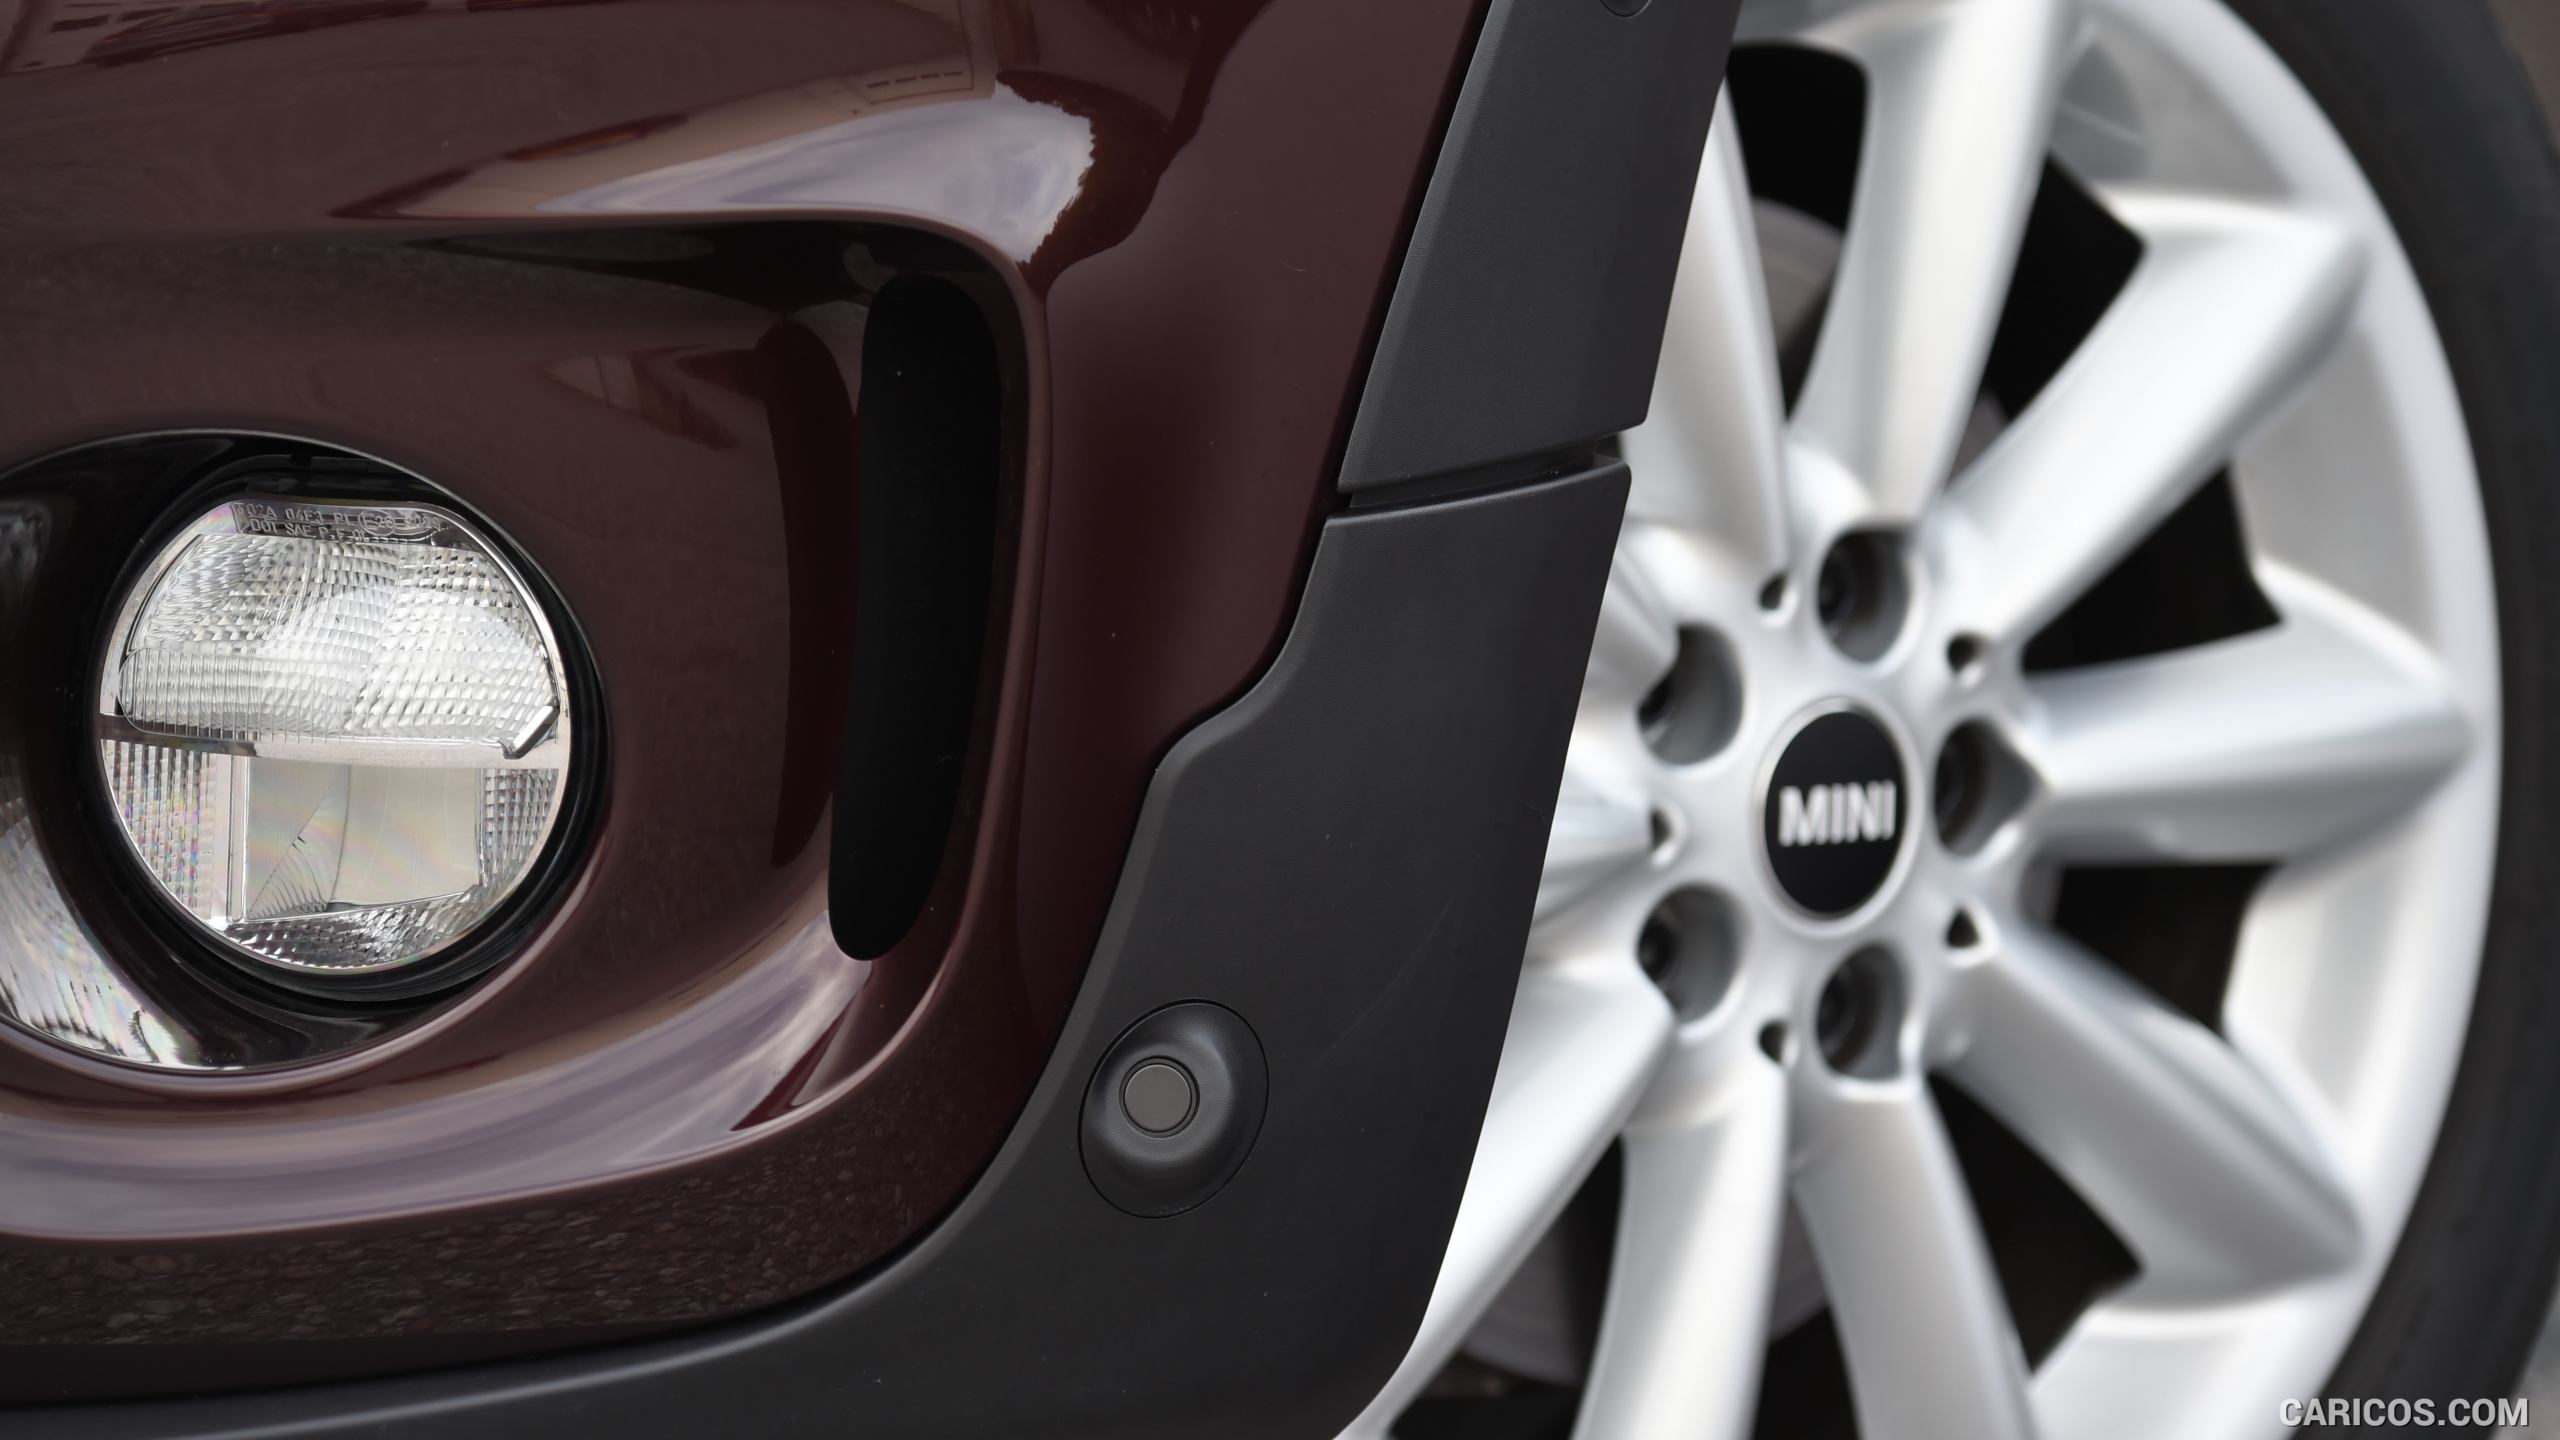 2016 MINI Cooper S Clubman in Metallic Pure Burgundy - Wheel, #345 of 380